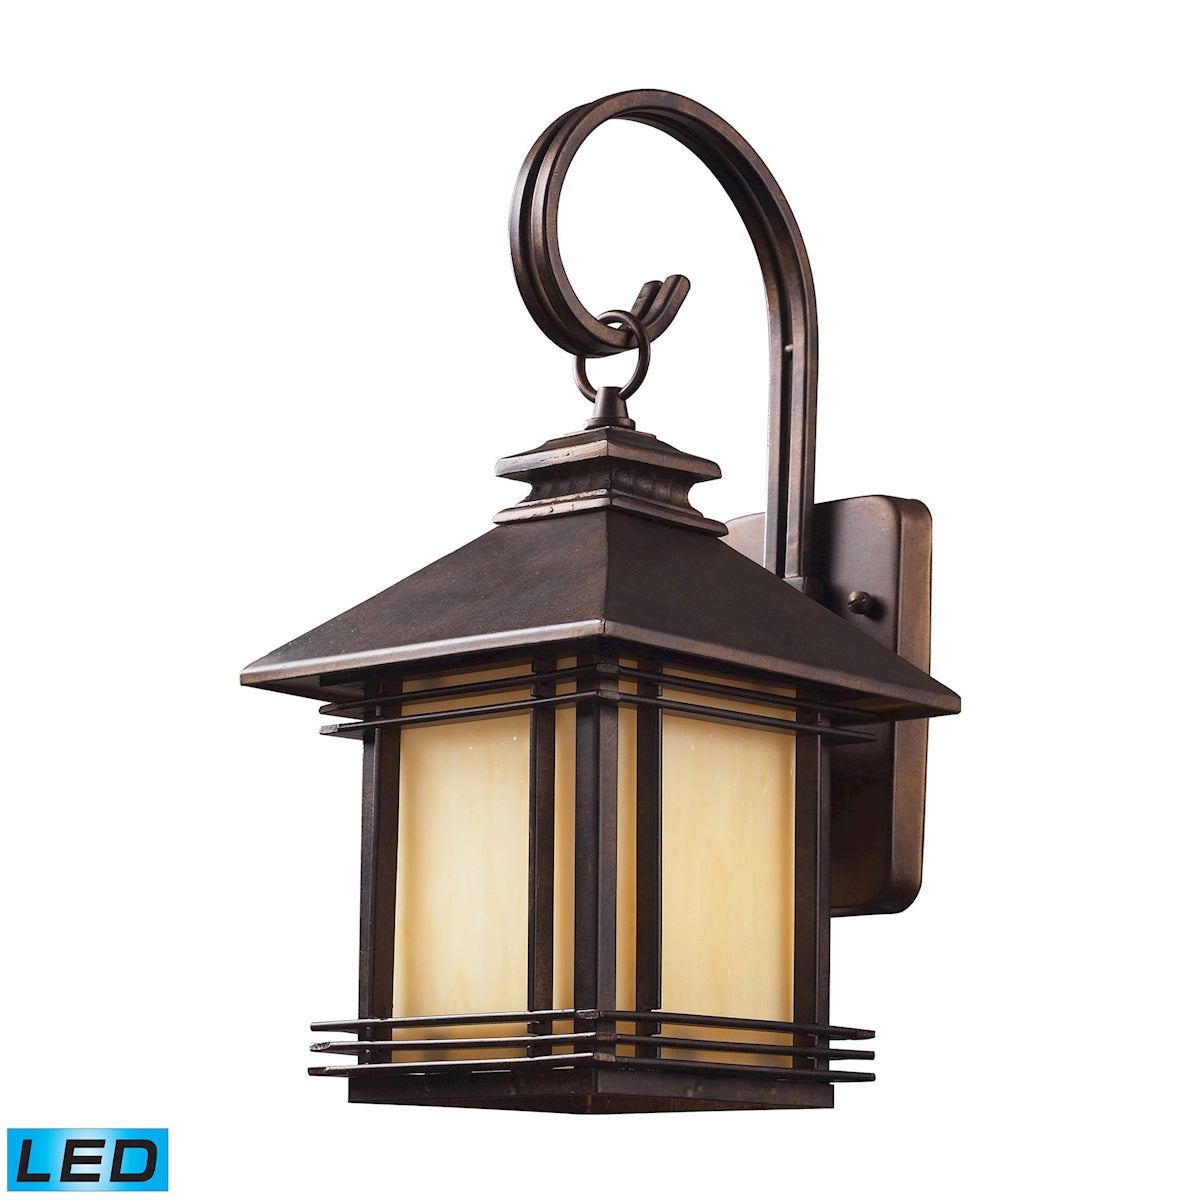 ELK Lighting 42100/1-LED Blackwell 1-Light Outdoor Wall Lantern in Hazelnut Bronze - Includes LED Bulb